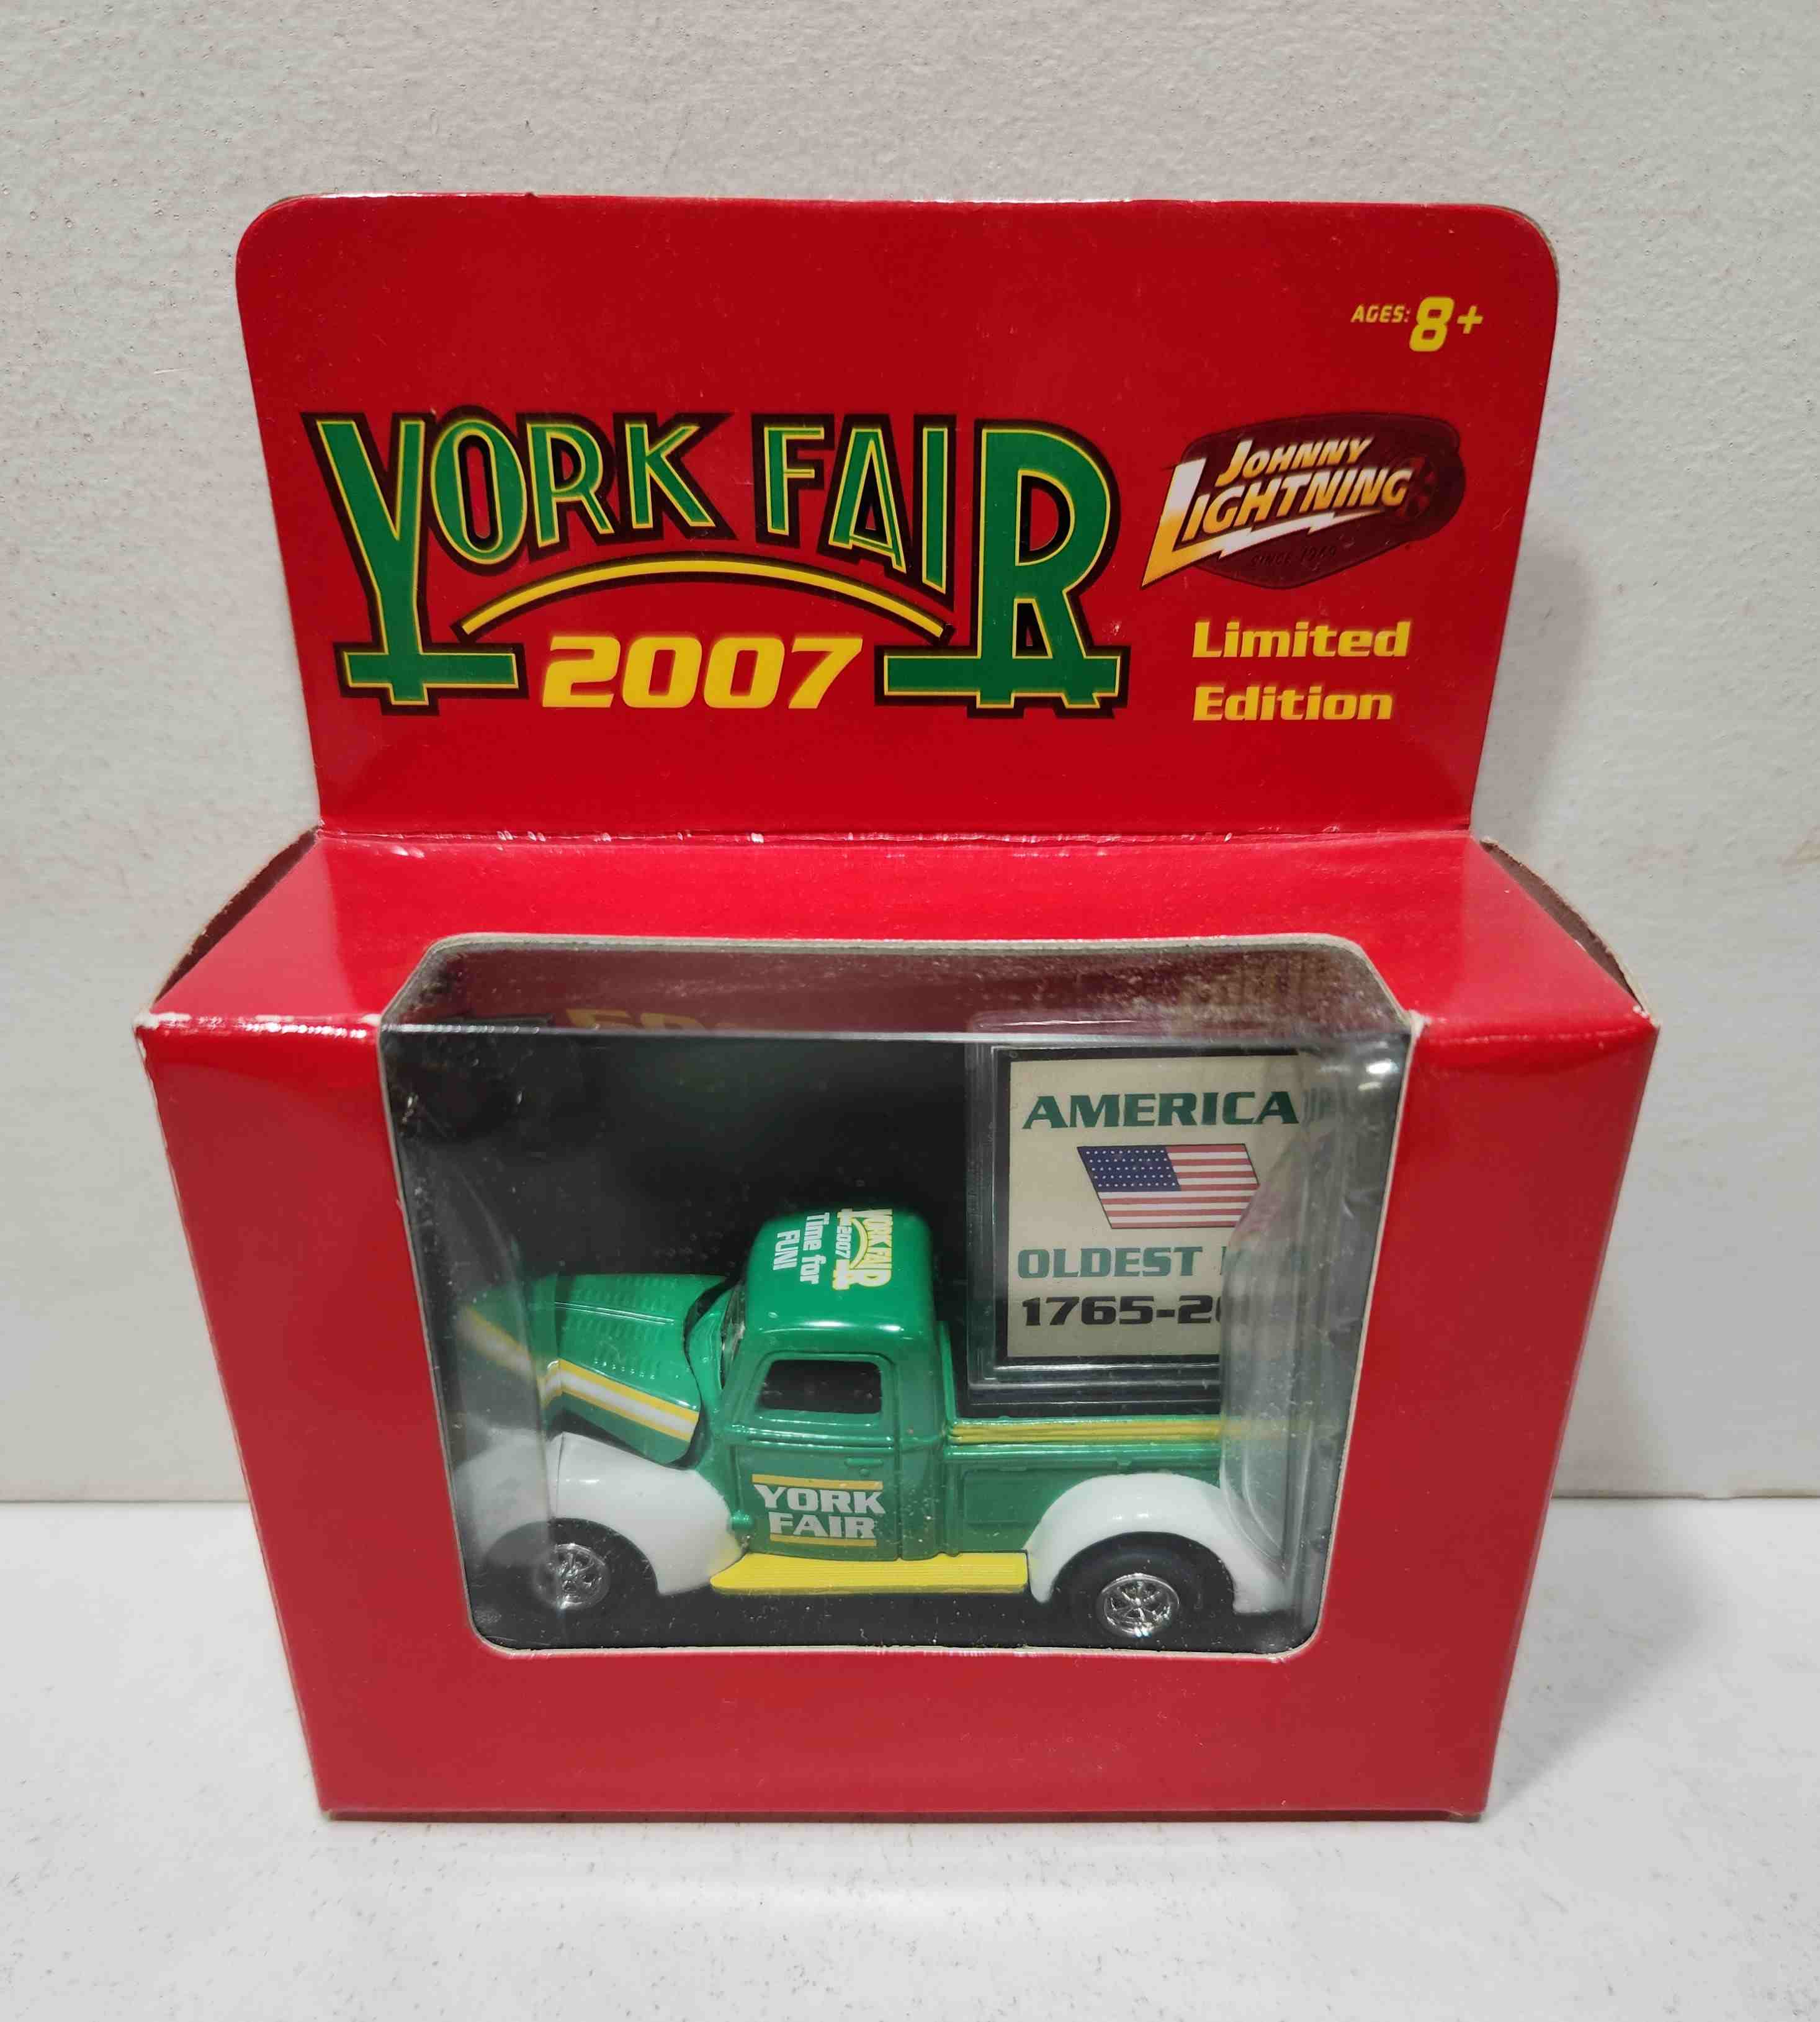 2007 York Fair 1/64th Pick-Up Truck